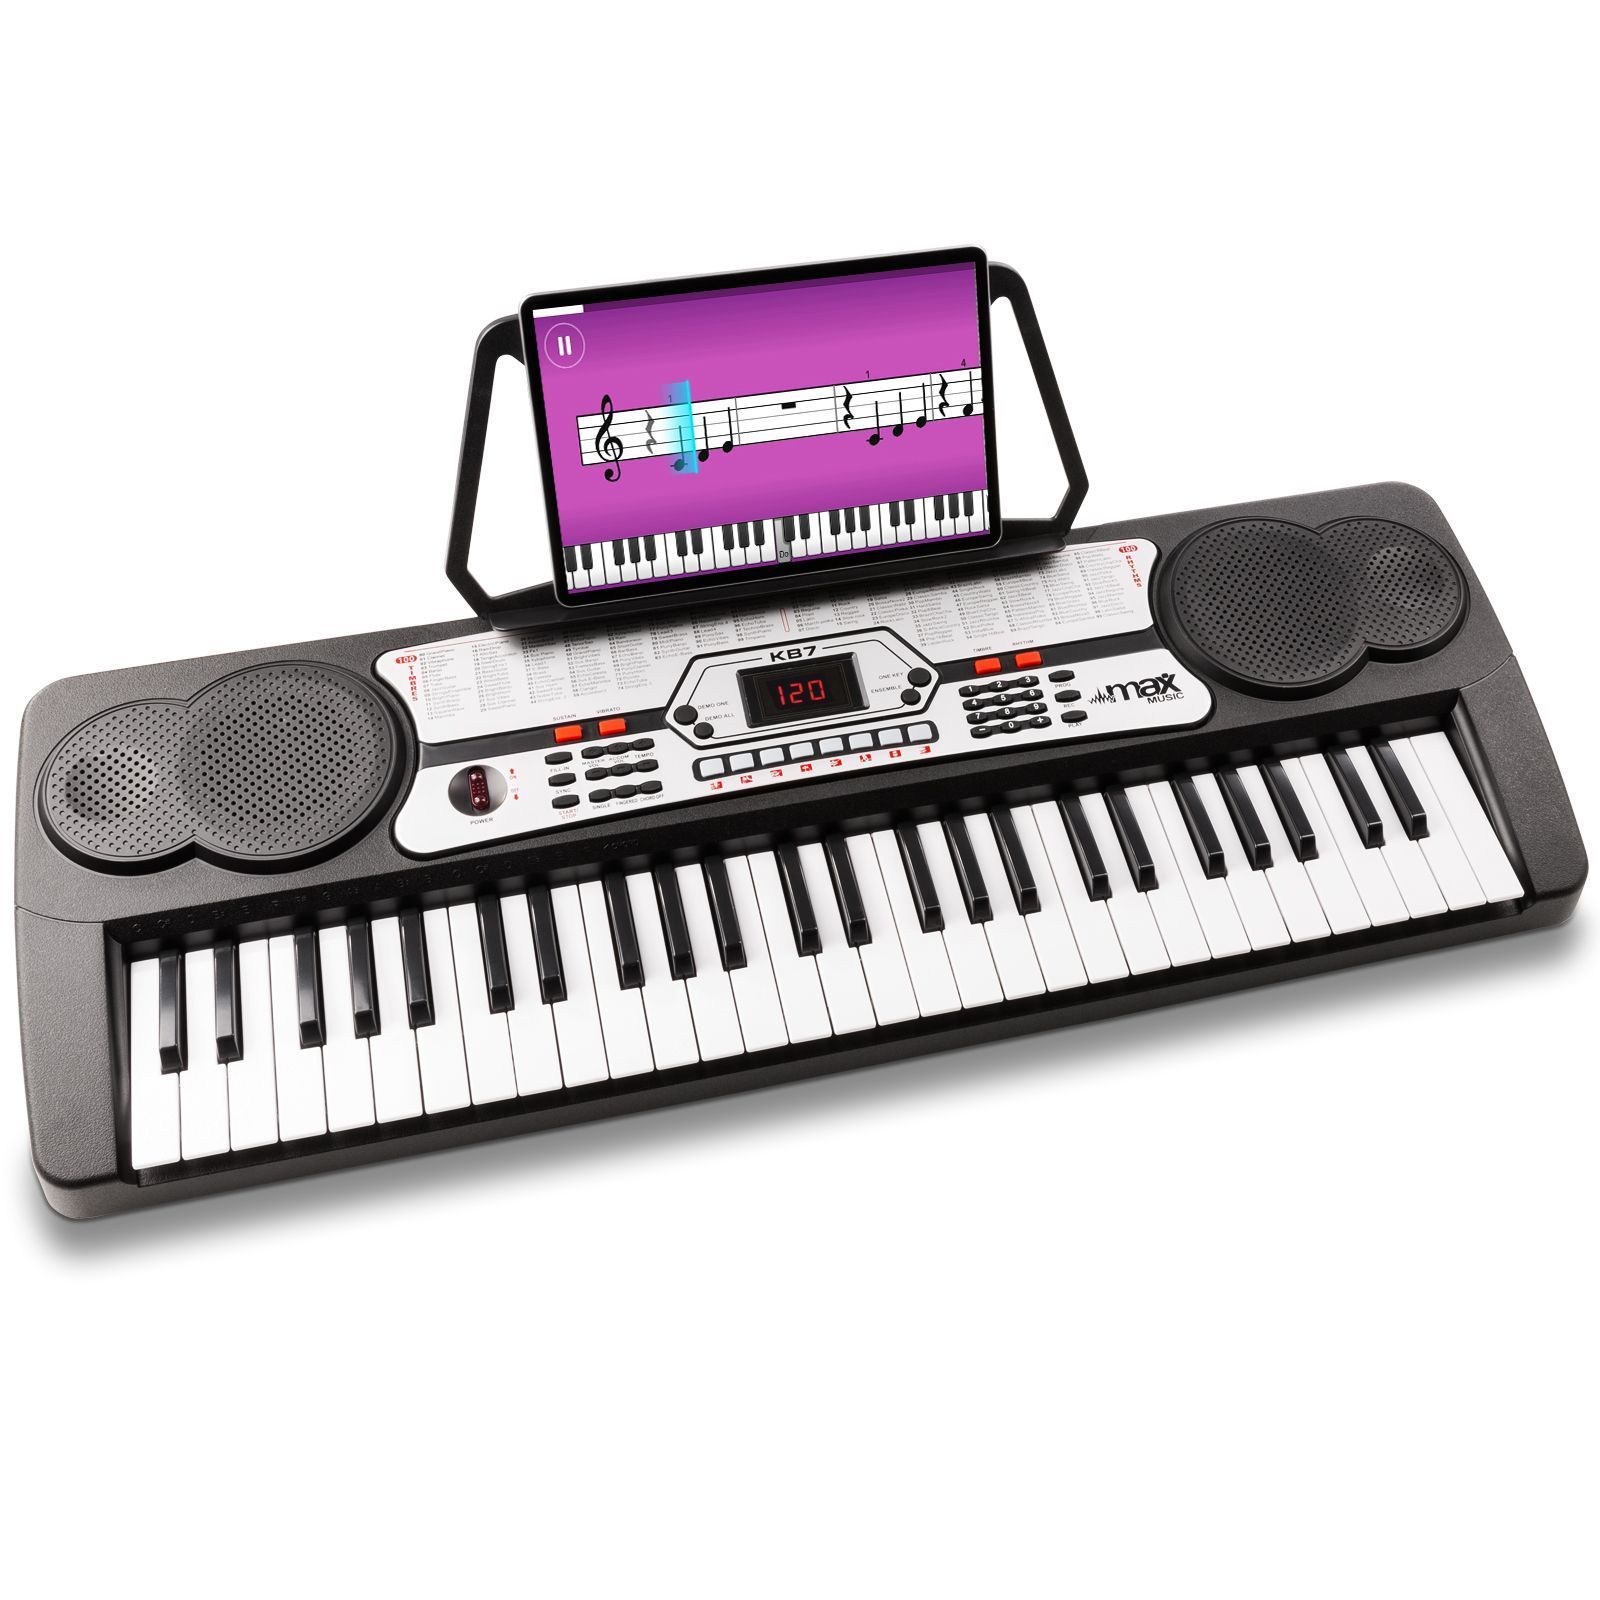 Retourdeal - MAX KB7 keyboard piano met 54 toetsen voor jong en oud